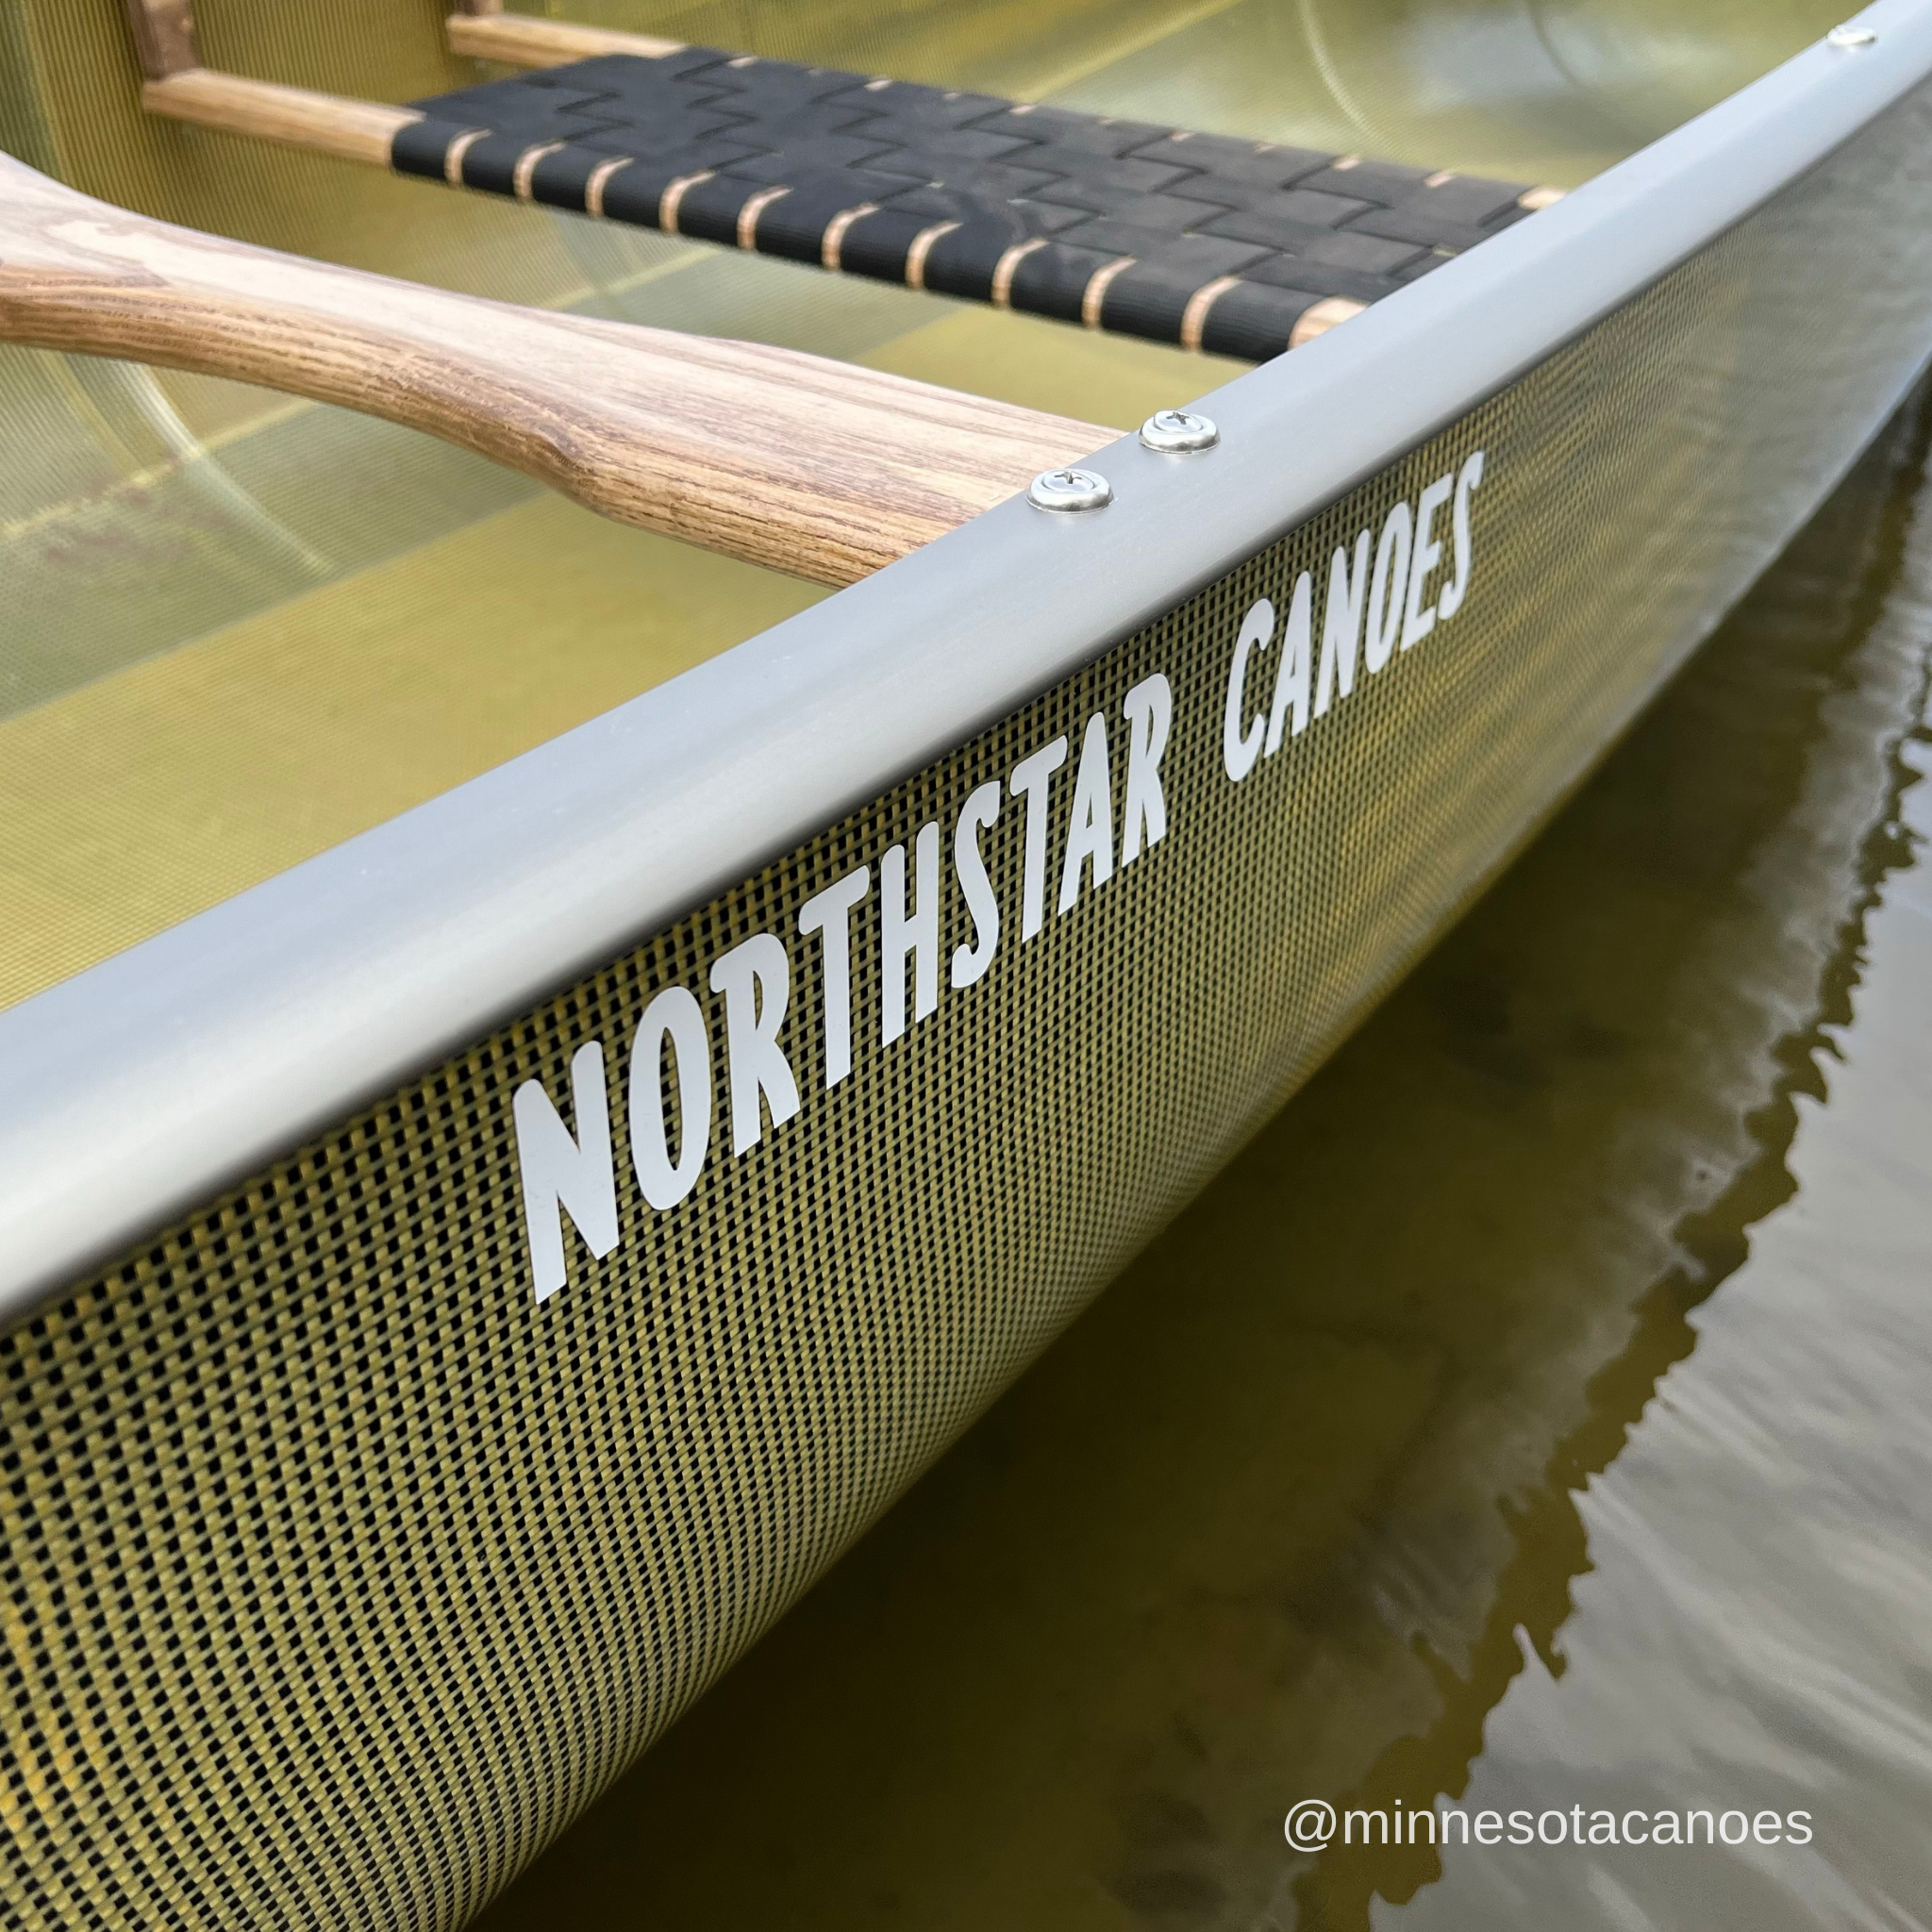 NORTHWIND 18 (18' 9") StarLite Tandem Northstar Canoe with 3 Seats